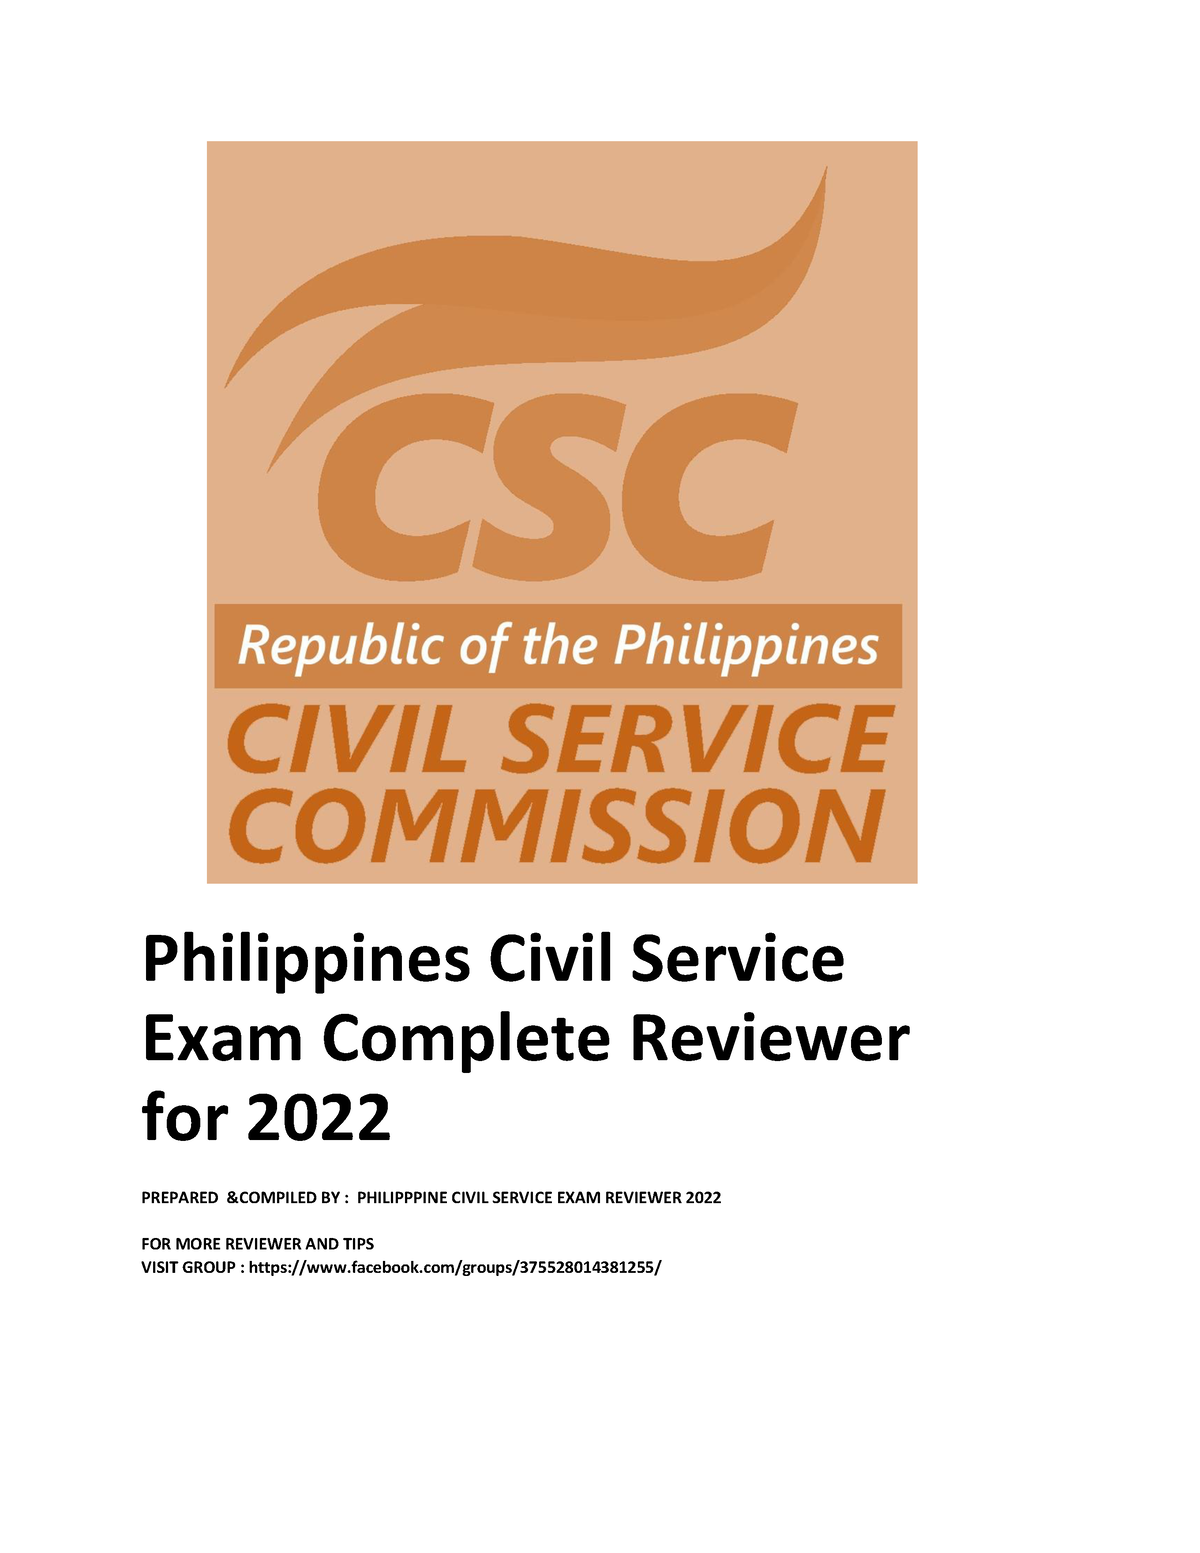 Civil Service Exam Complete Reviewer MOCK EXAM Philippines Civil